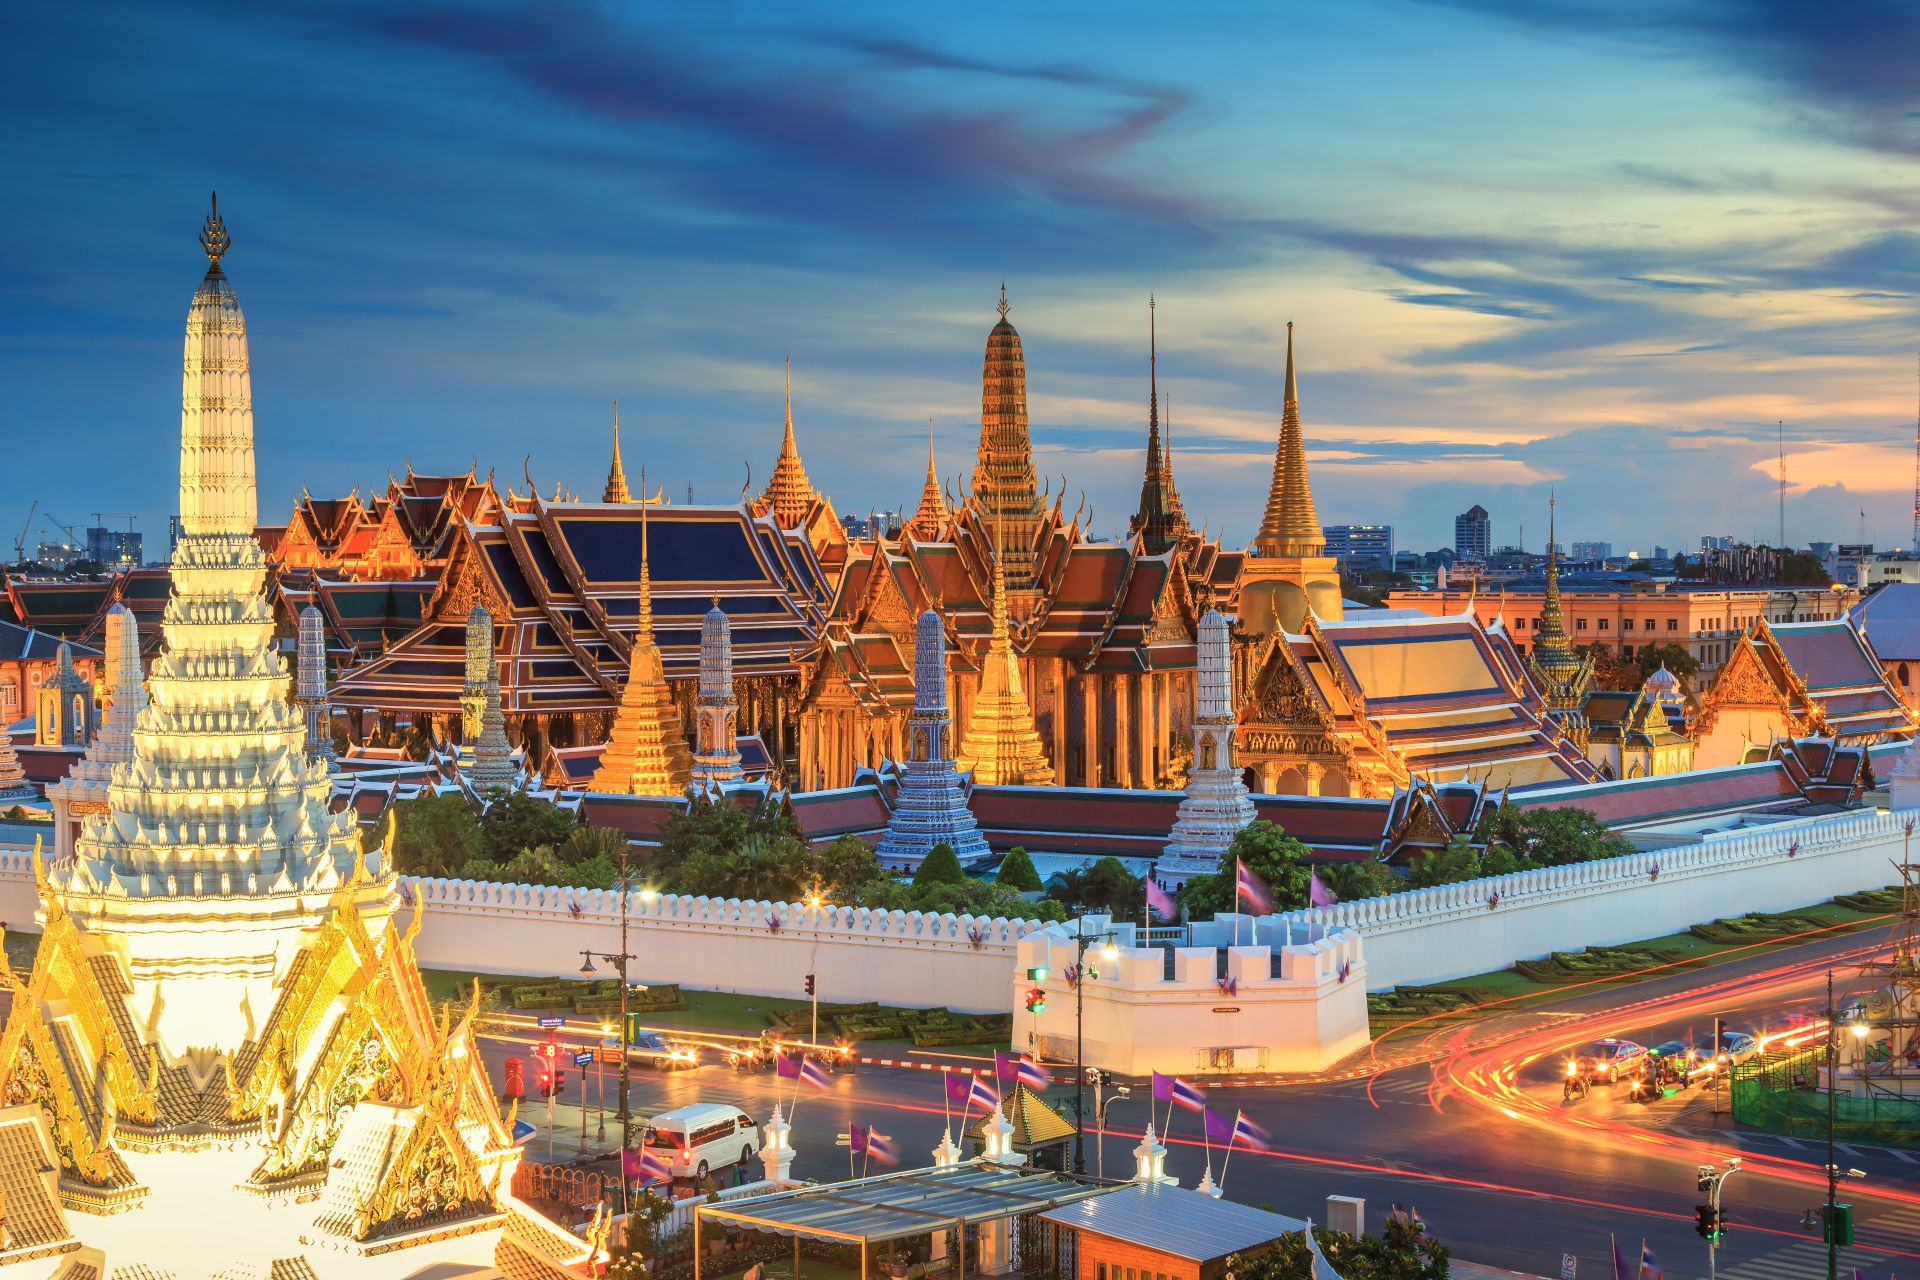 Grand Palace y Wat phra keaw al atardecer Bangkok